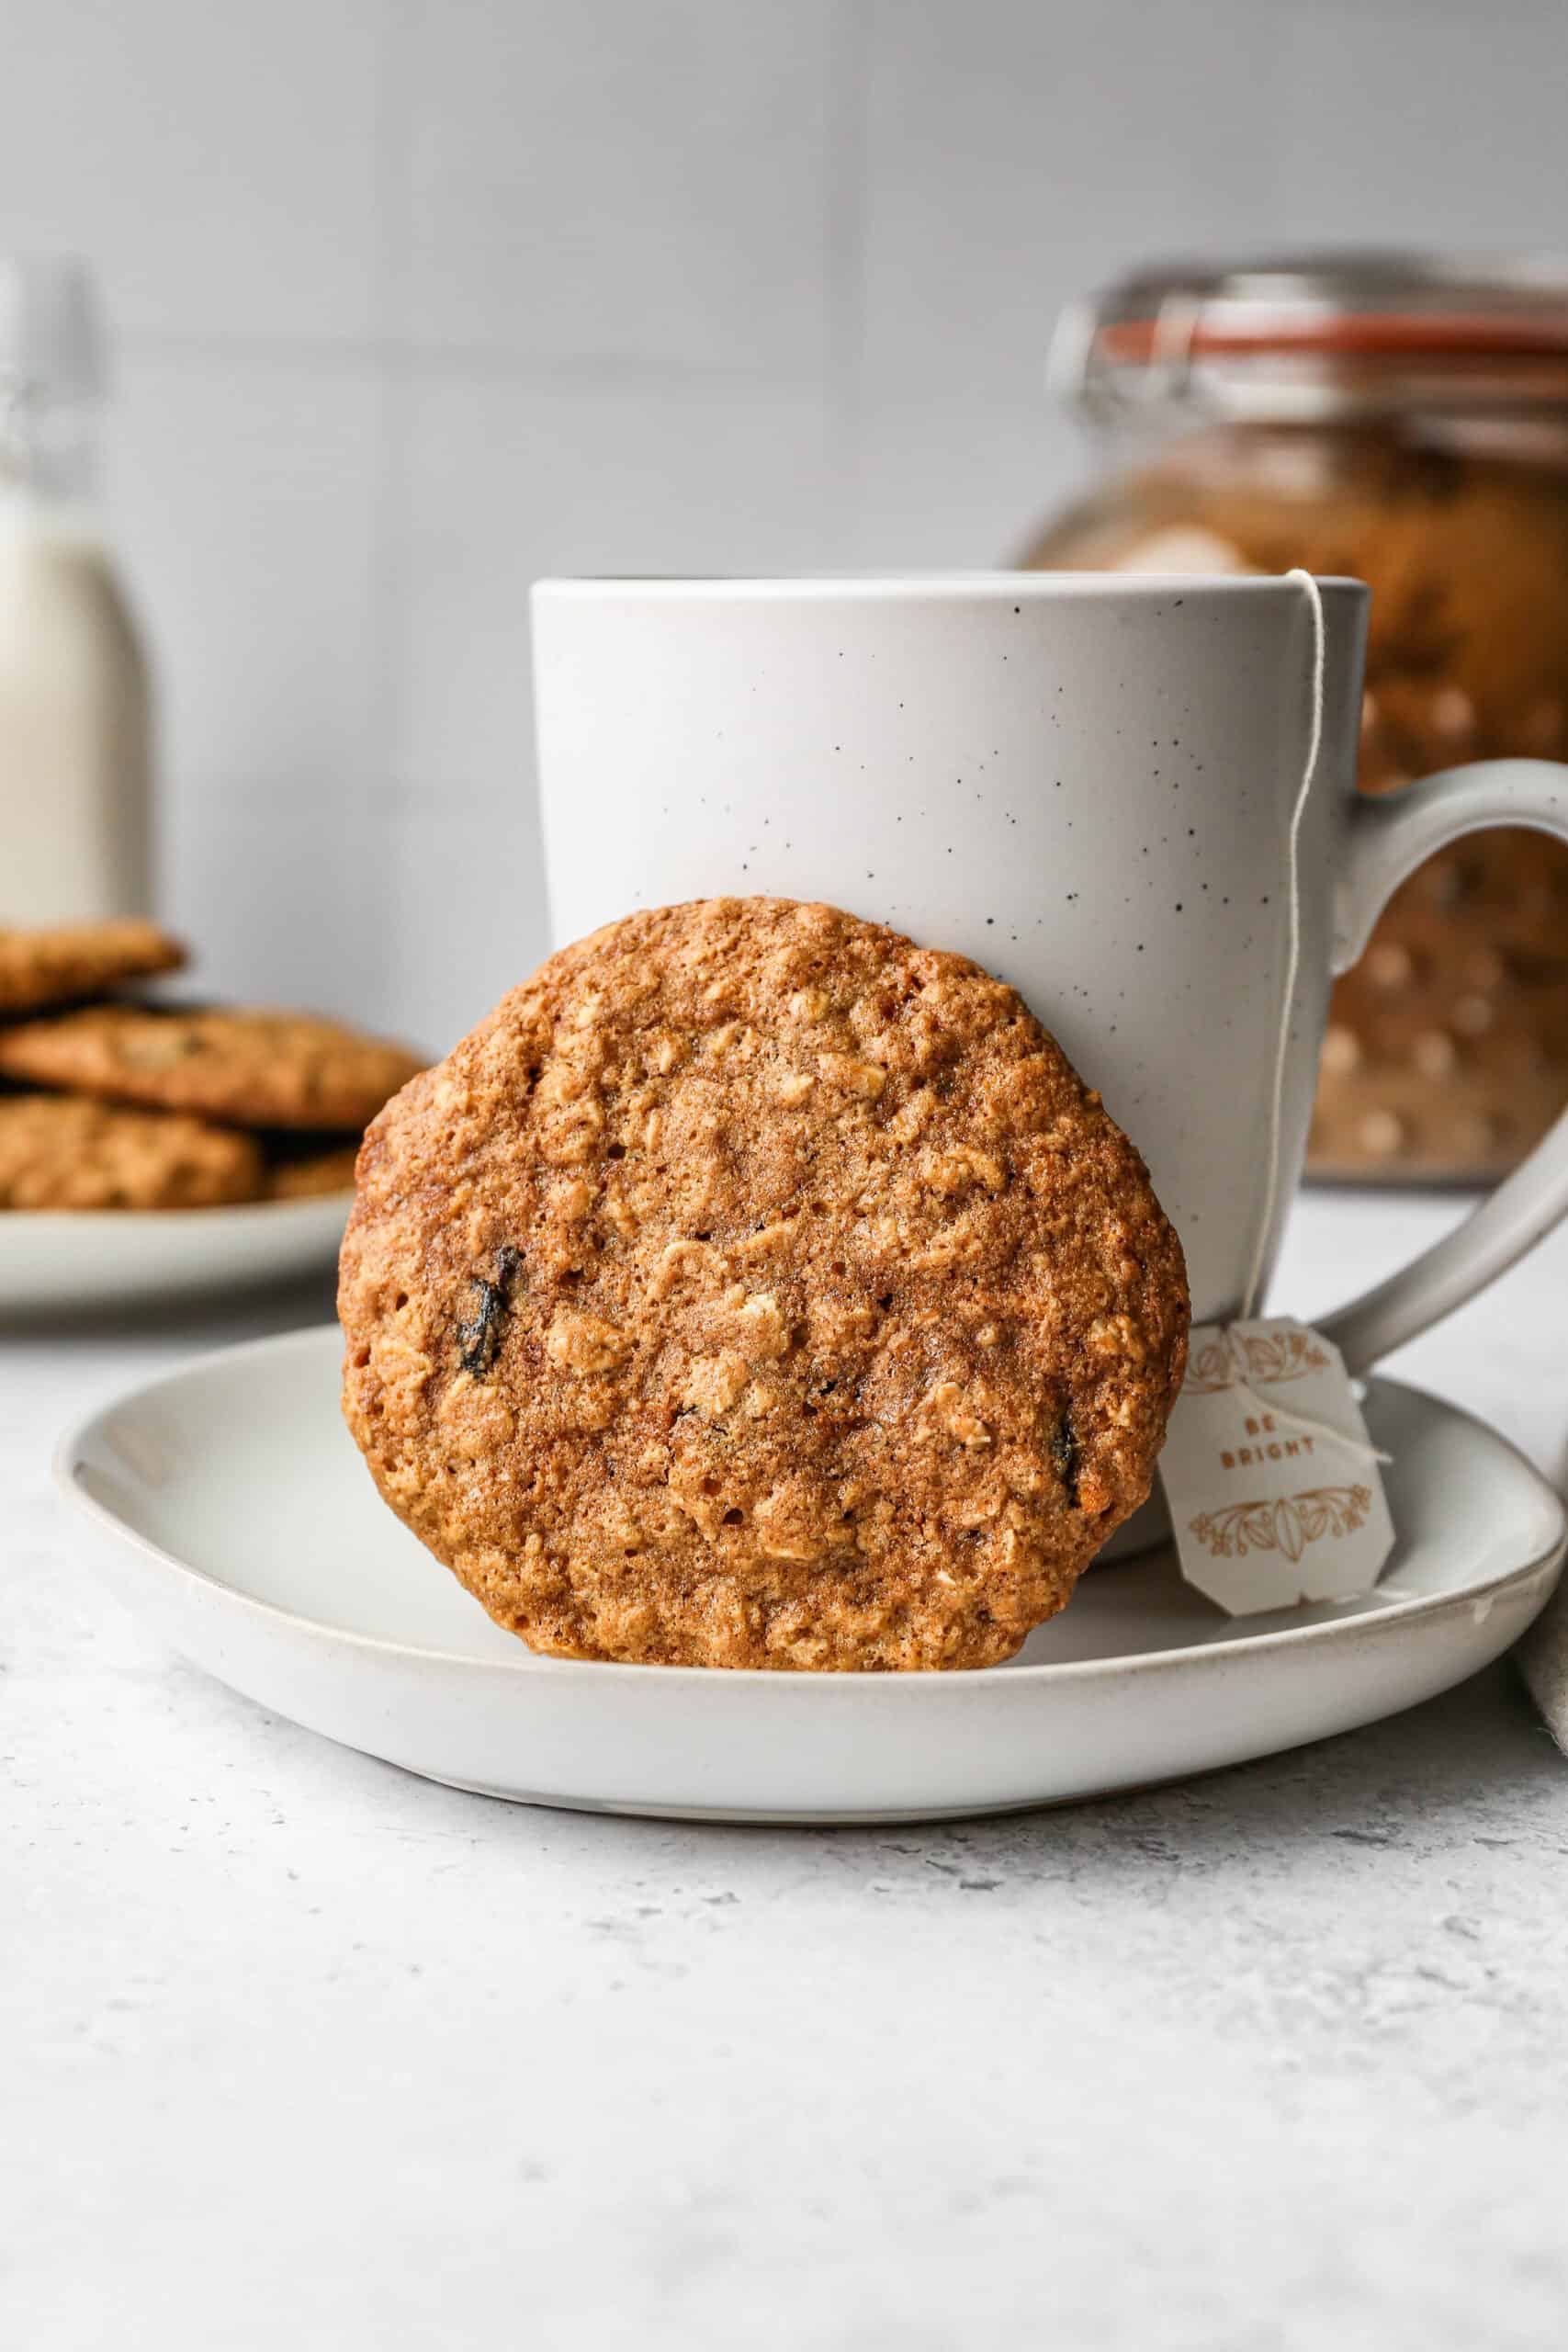 a gluten free oatmeal raisin cookie leaning again a white mug of tea on a white plate.